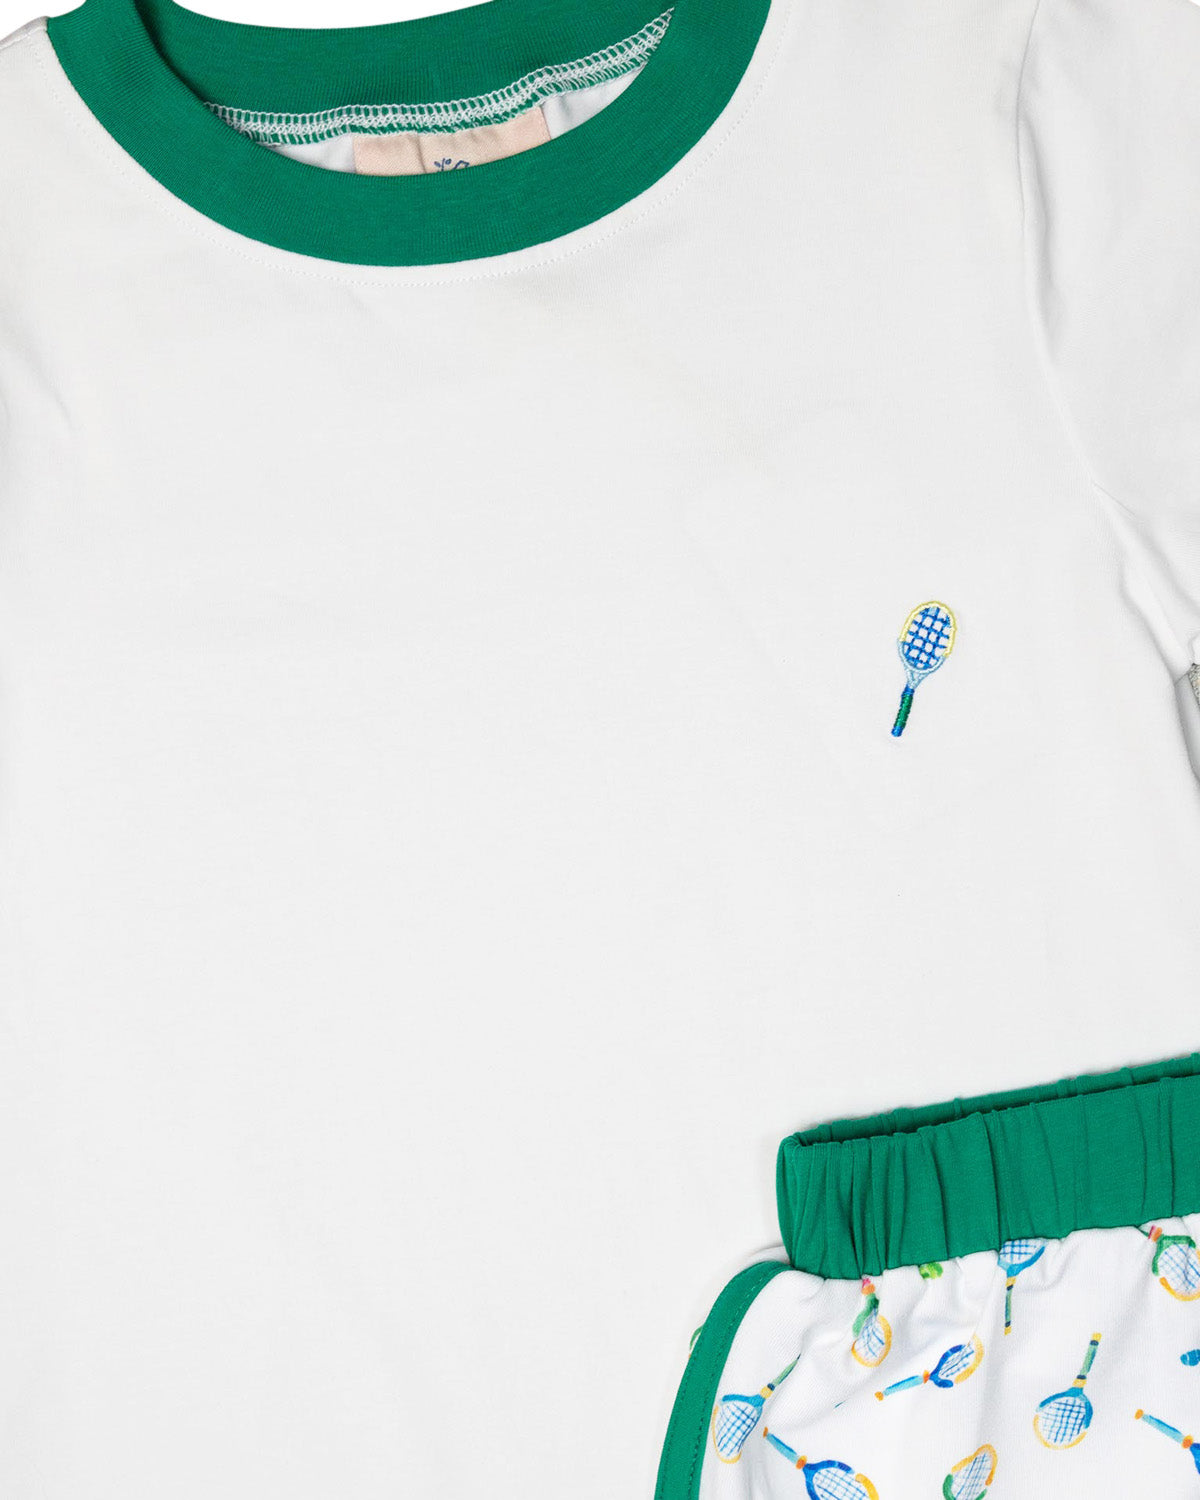 Tennis Print Knit Shorts Set with Green Trim